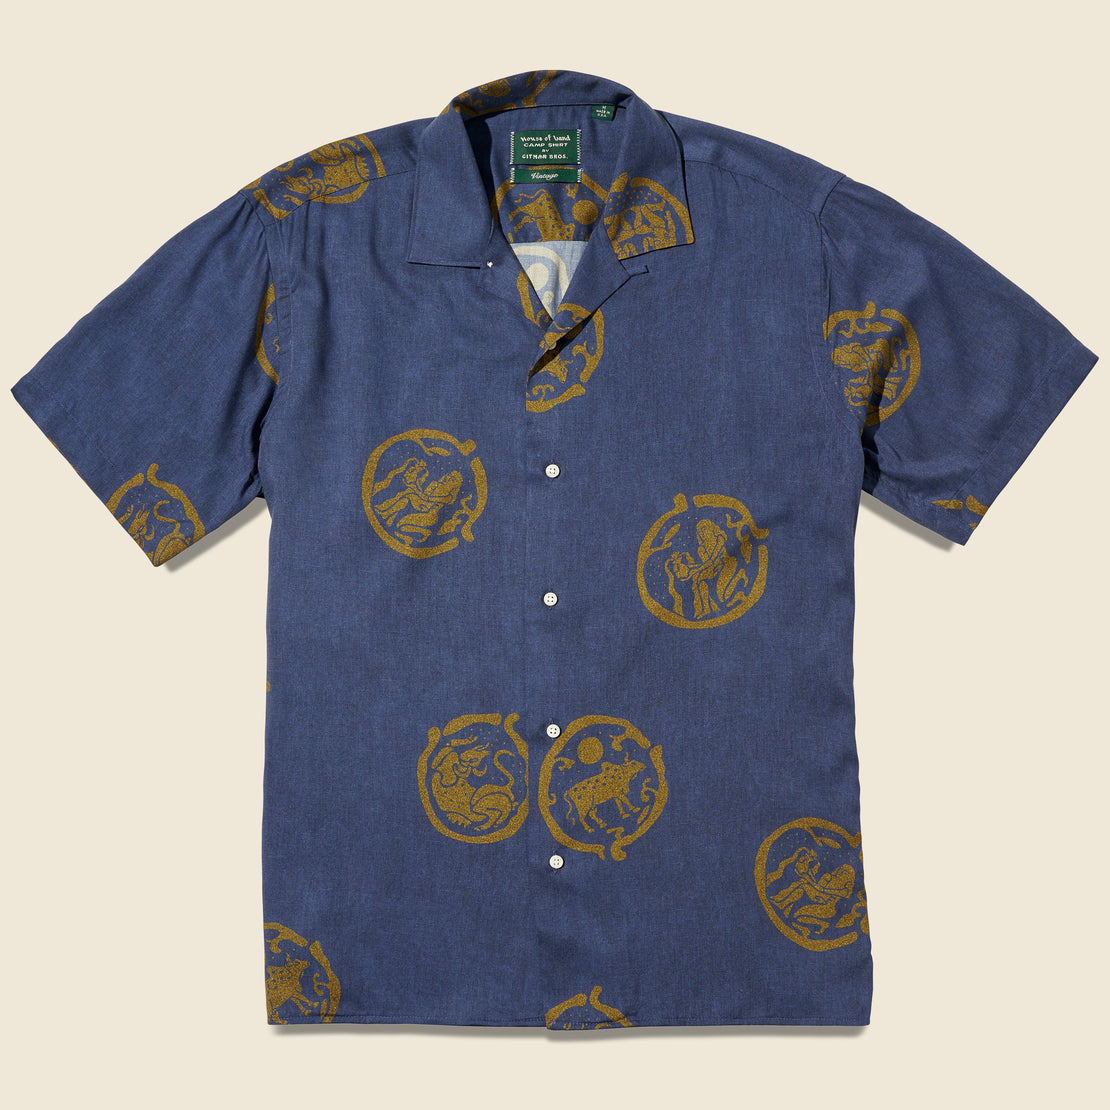 House of LAND x Gitman Vintage Zodiac Camp Shirt - Navy/Gold